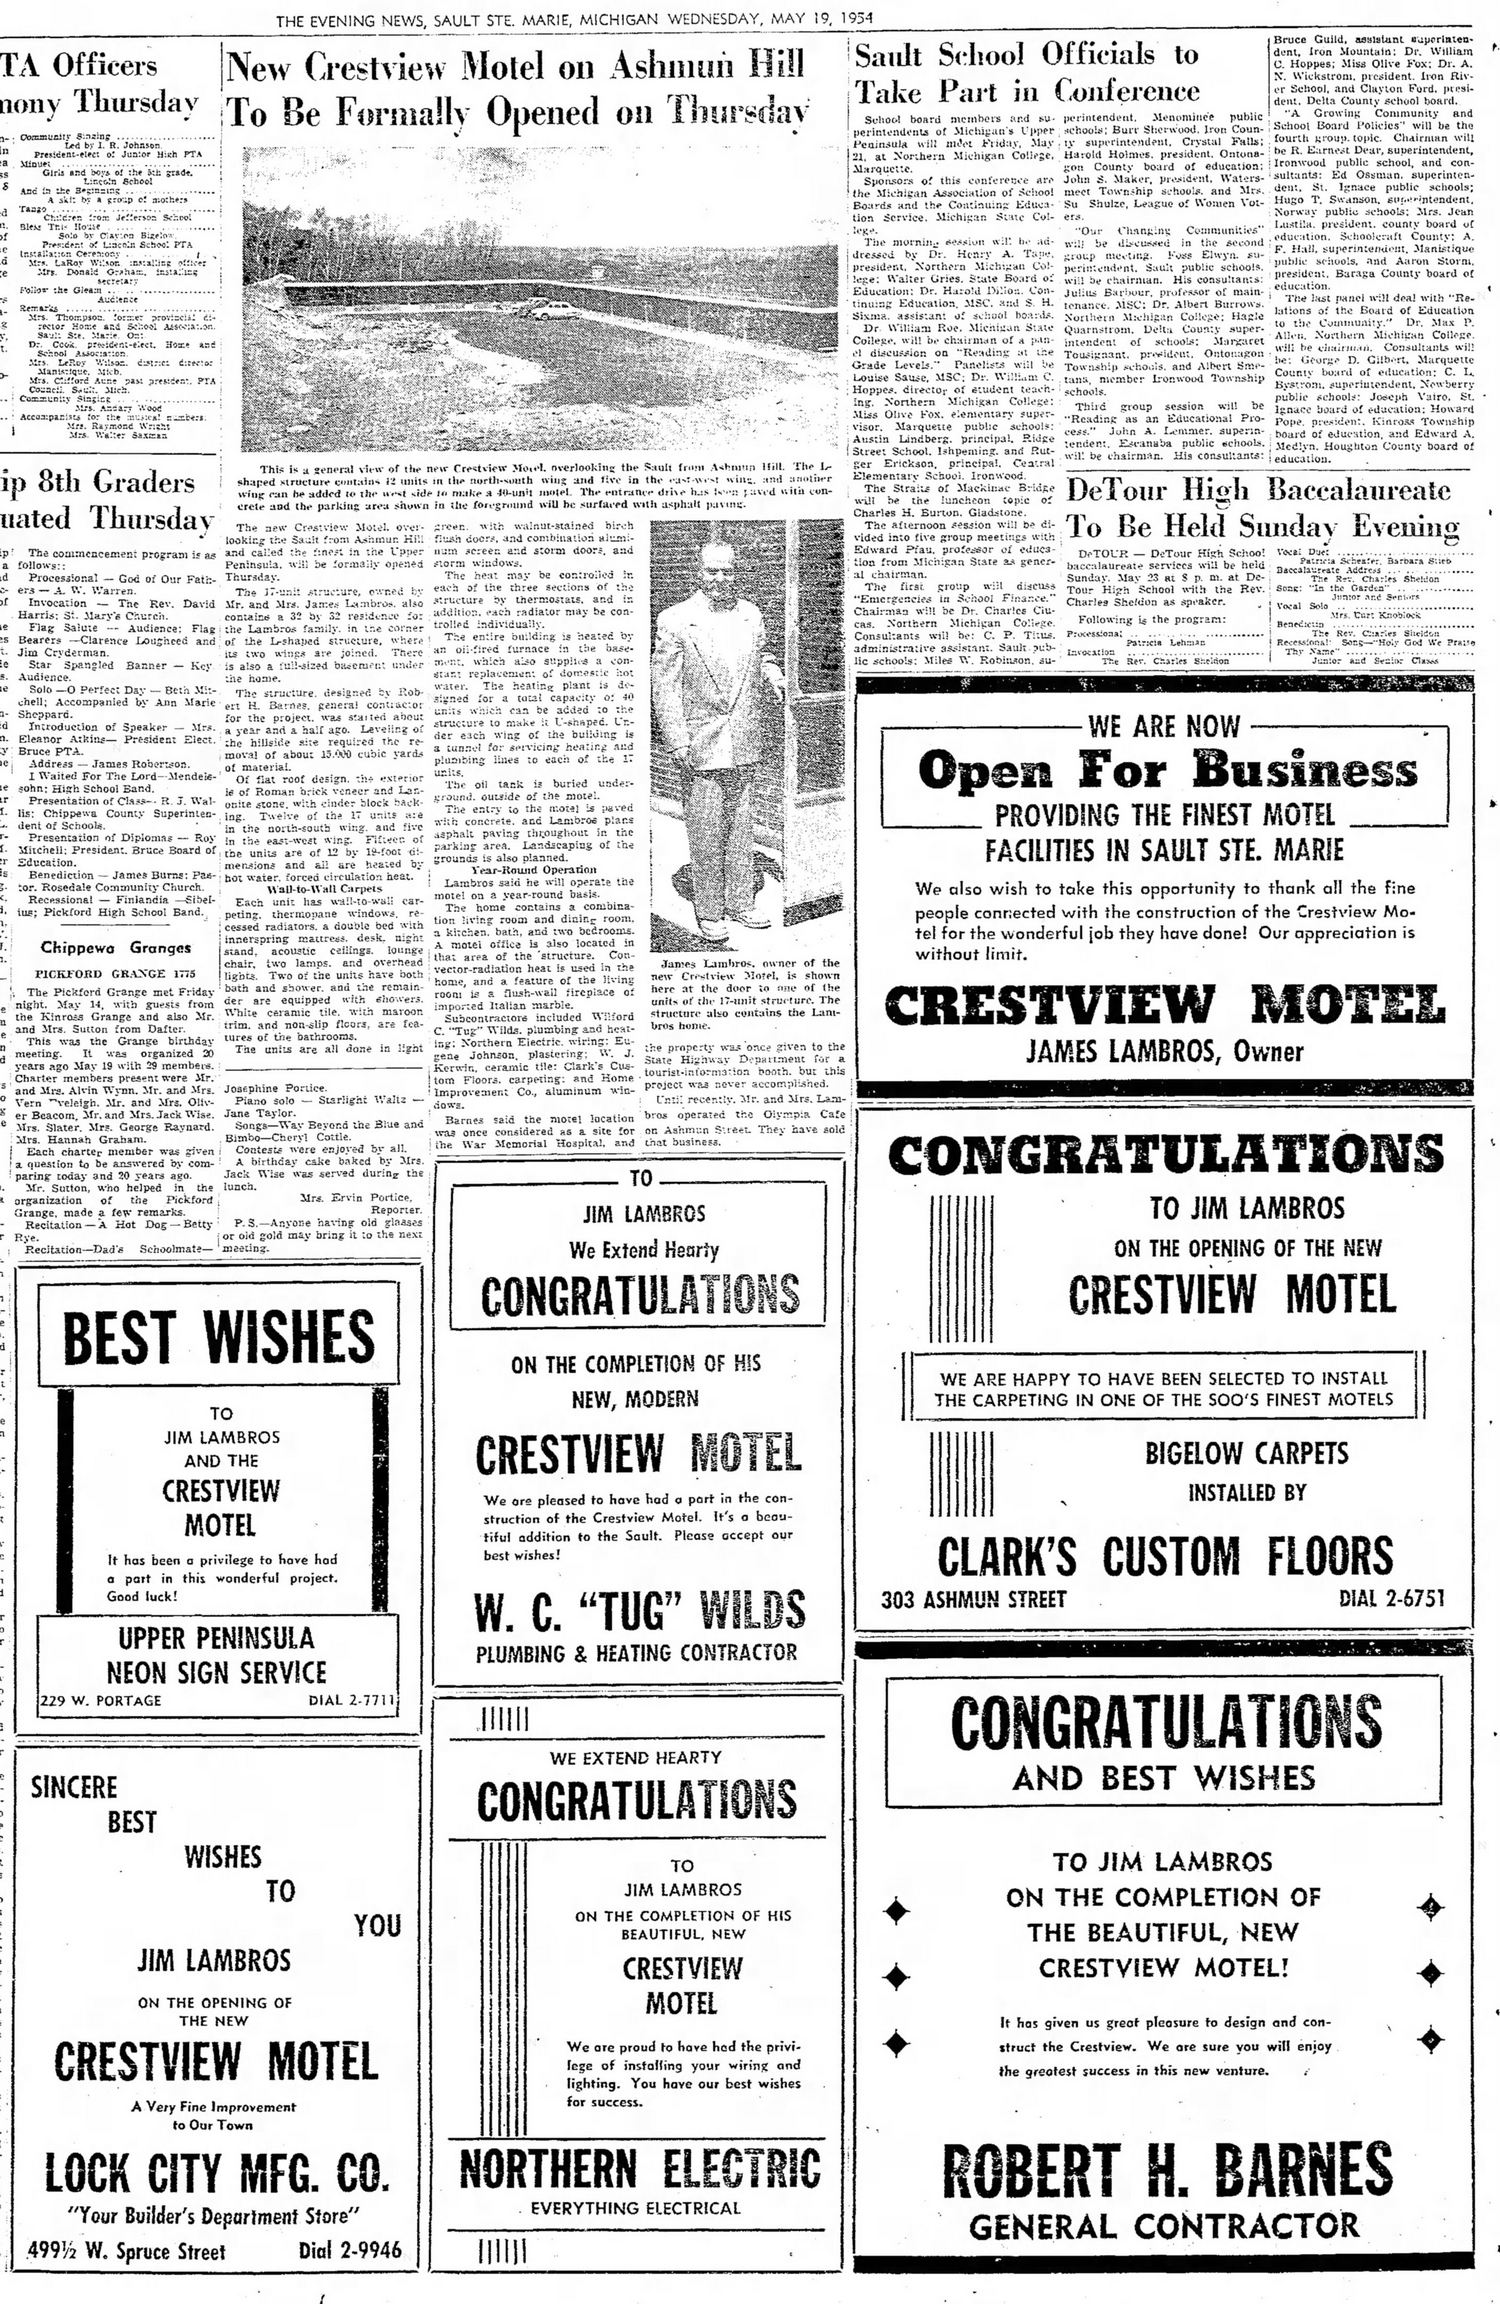 Budget Host Crestview Inn (Crestview Motel) - May 19 1954 Opening Article